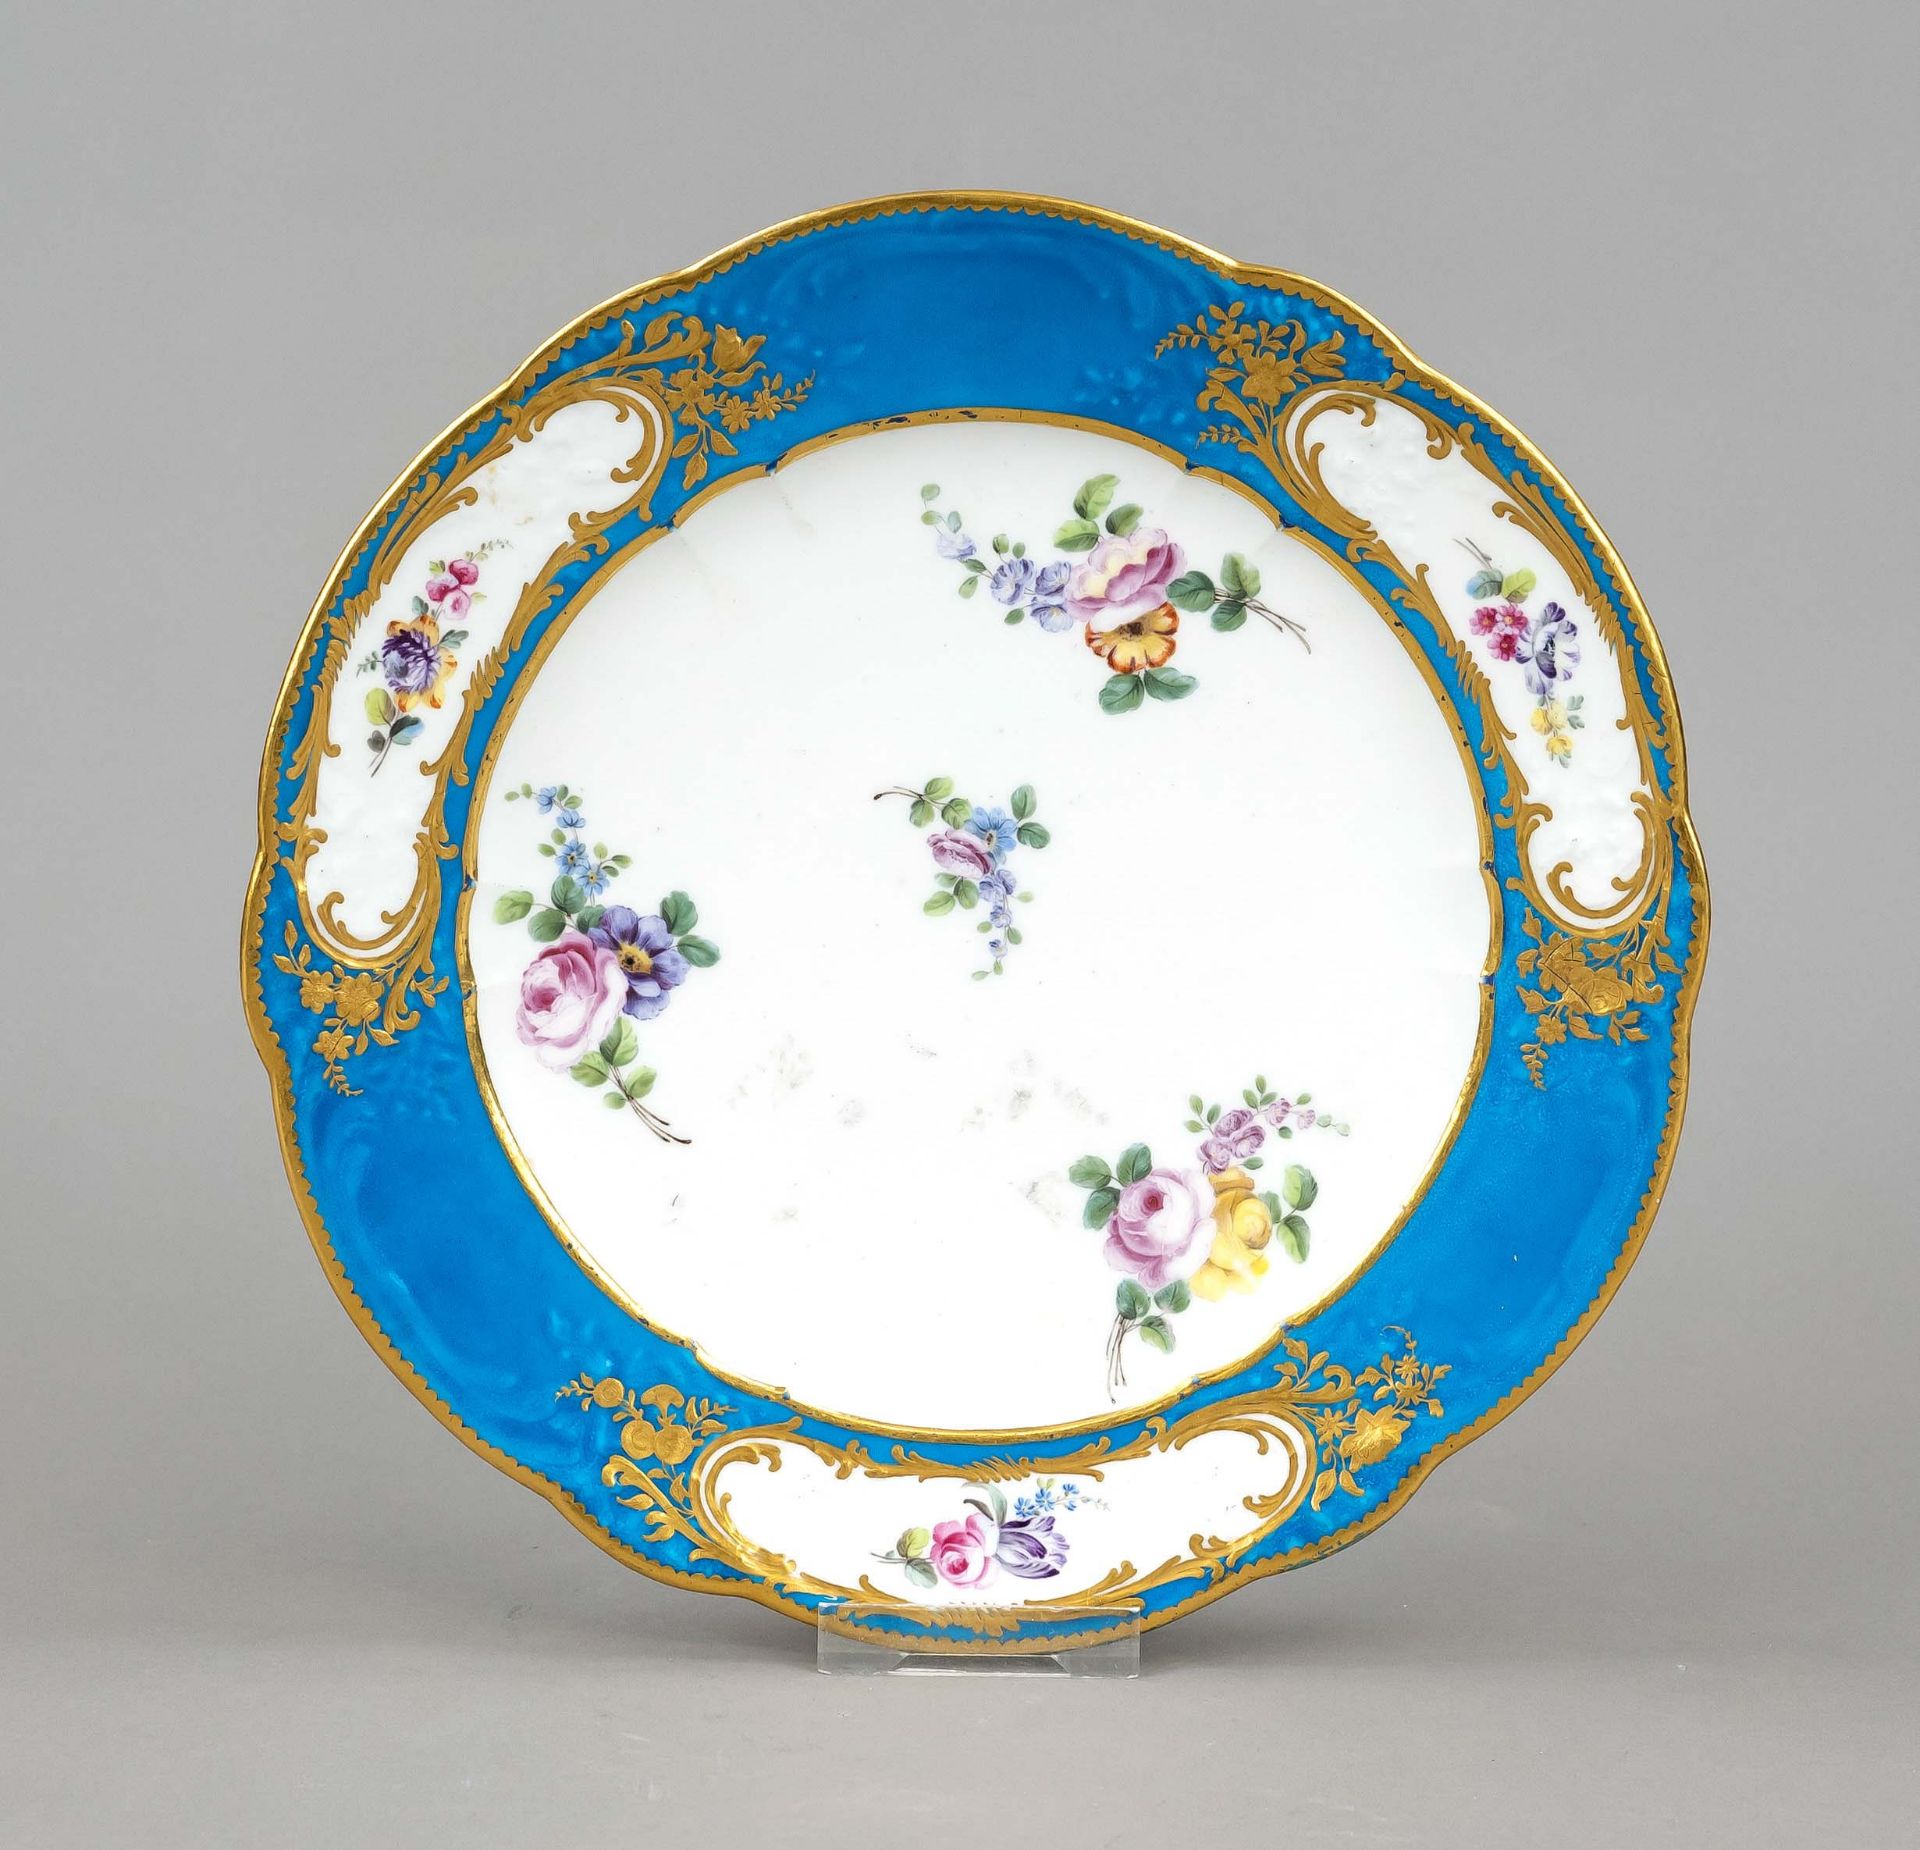 Plate, Sevres, France, 1766, form ''asiette a palmes'' (palm frond plate), polychrome floral